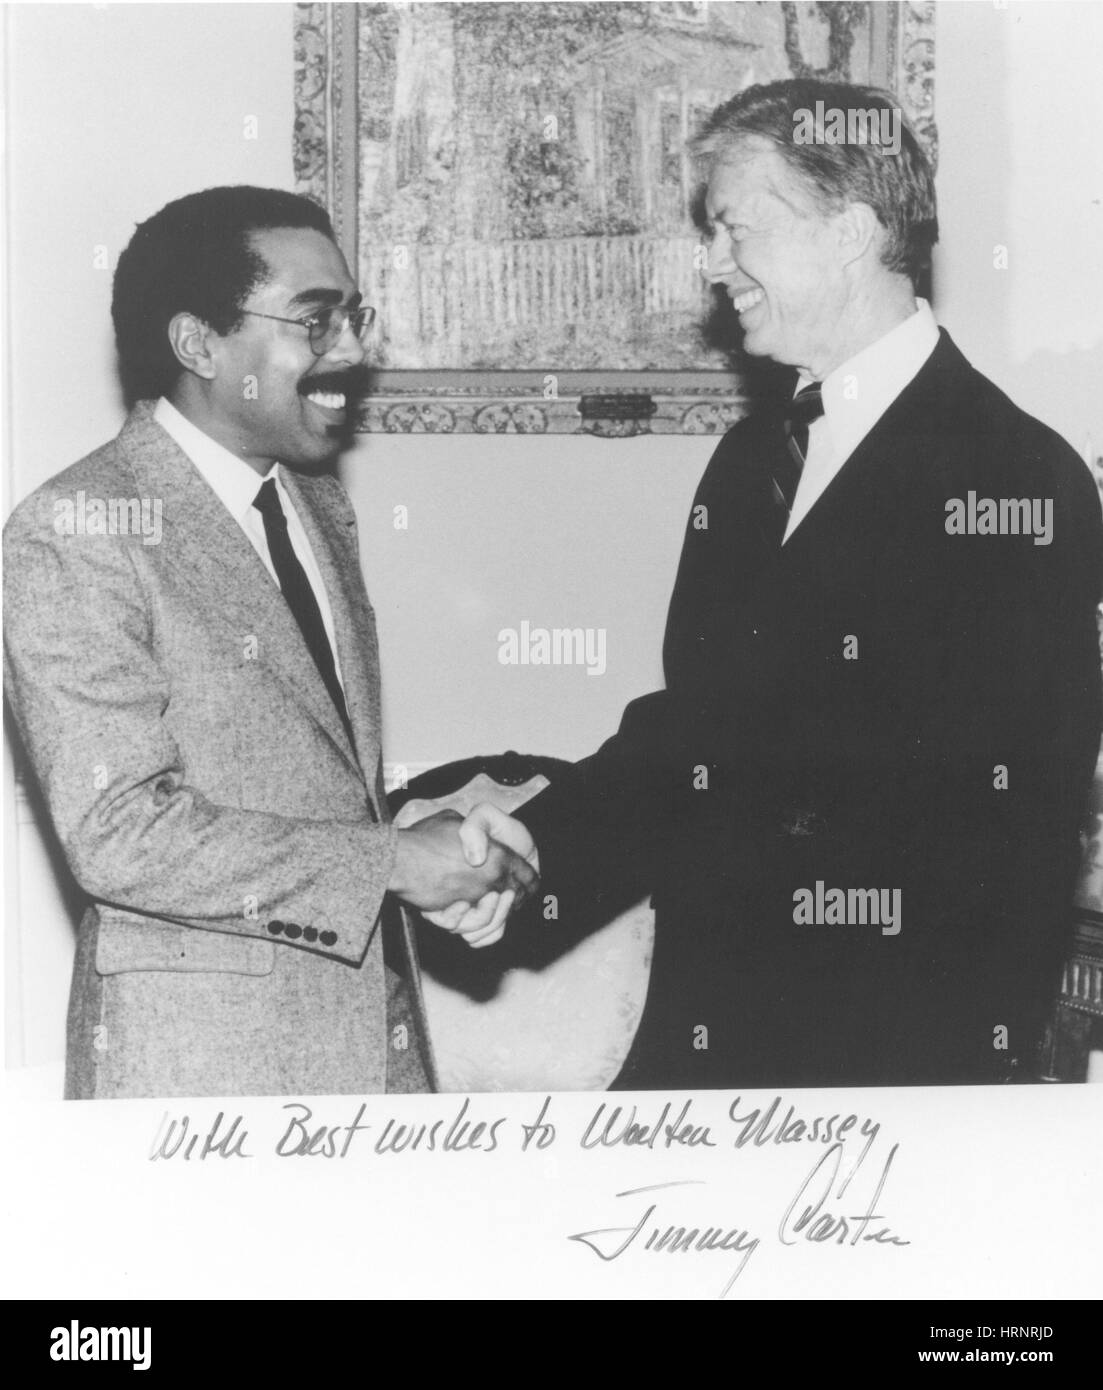 Walter E. Massey and Jimmy Carter Stock Photo